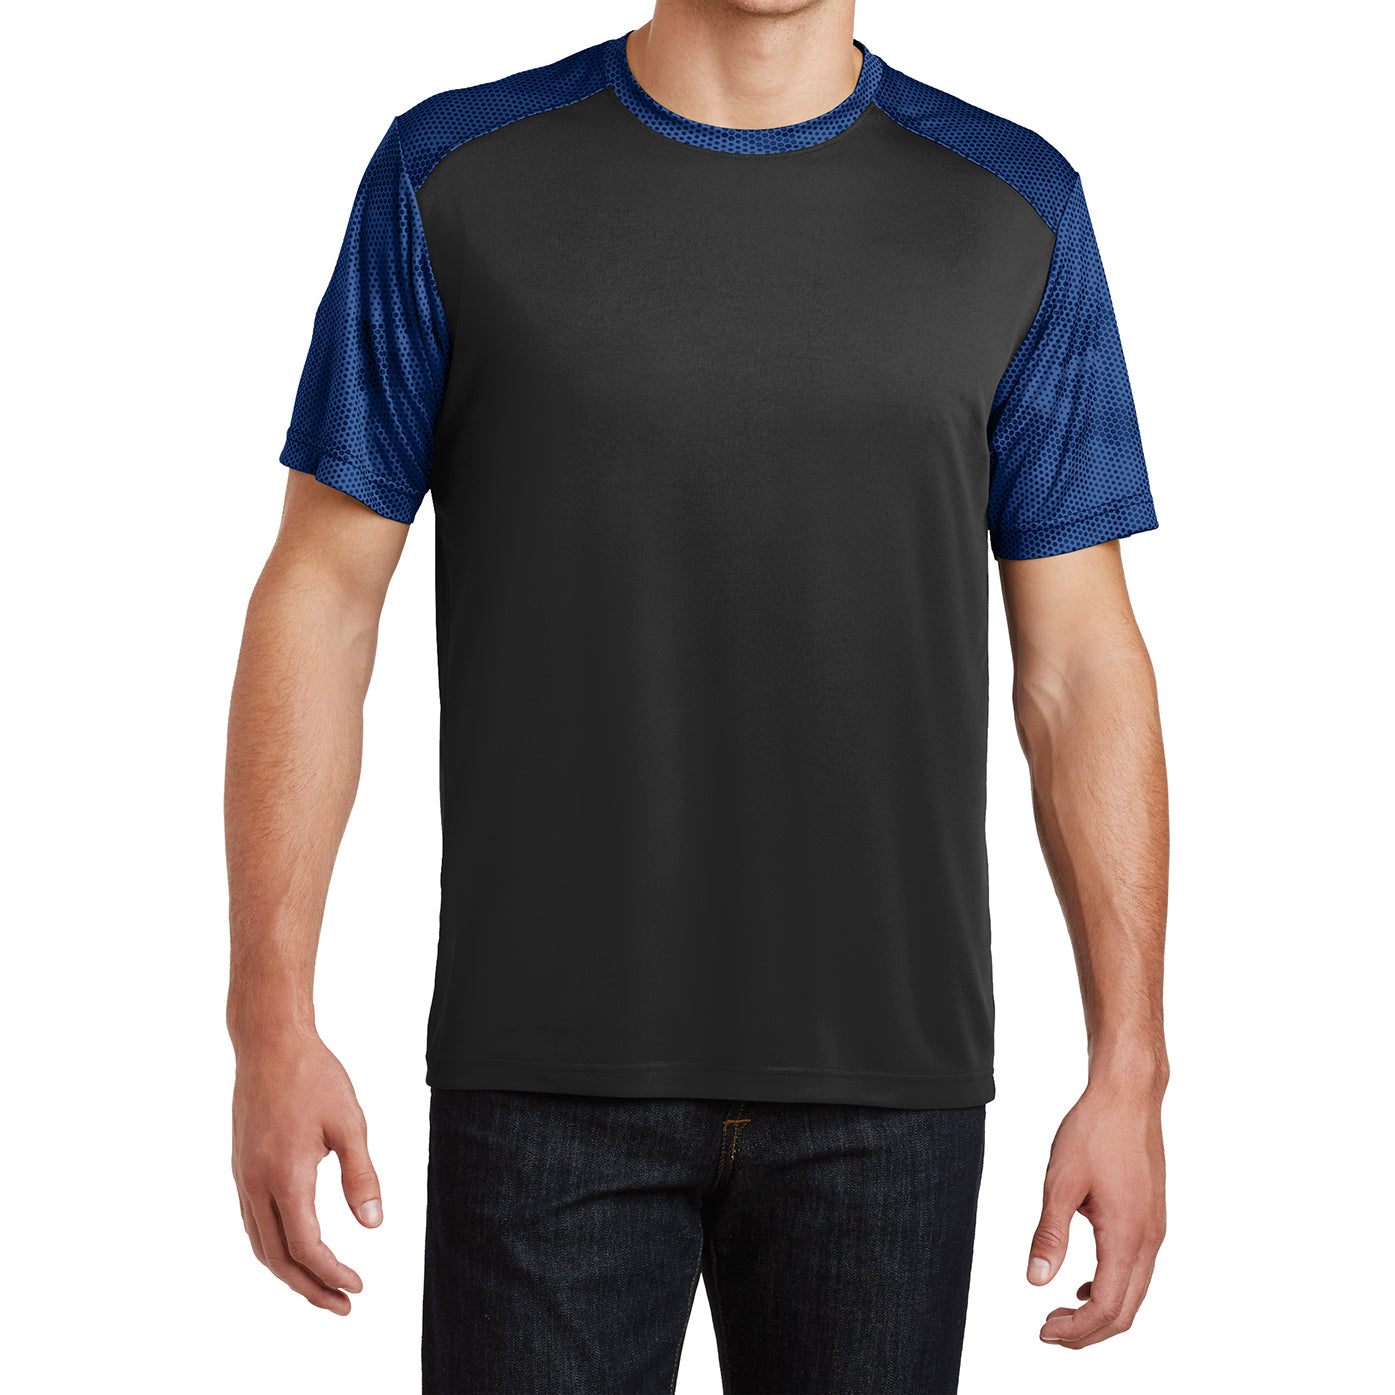 Men's CamoHex Colorblock Tee Shirt Black/ True Royal Front